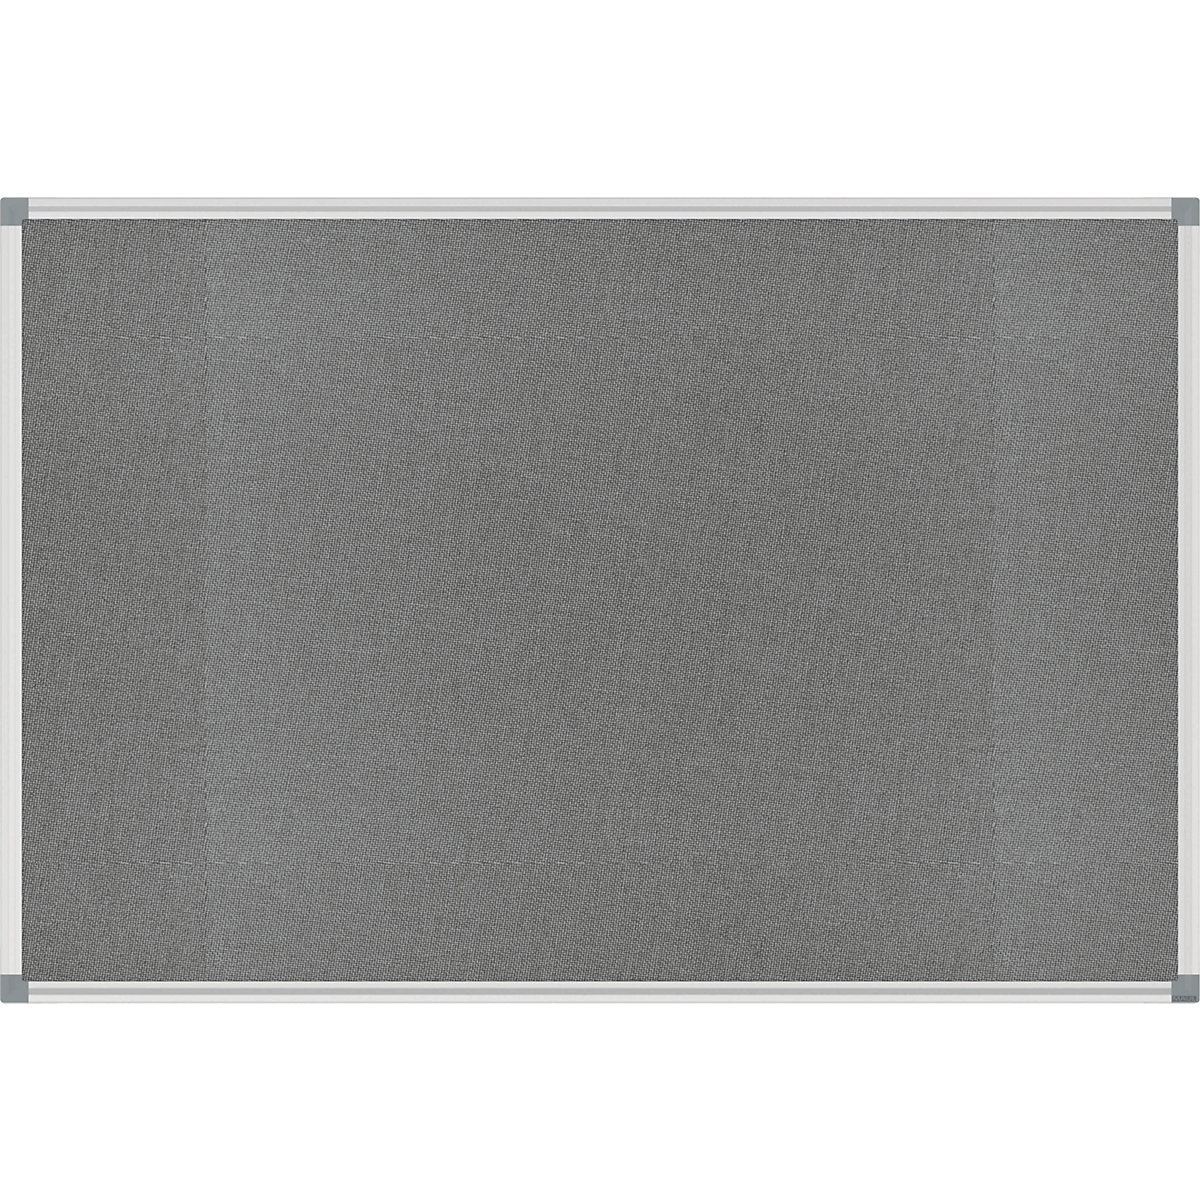 STANDARD pin board – MAUL, felt cover, grey, WxH 900 x 600 mm-2